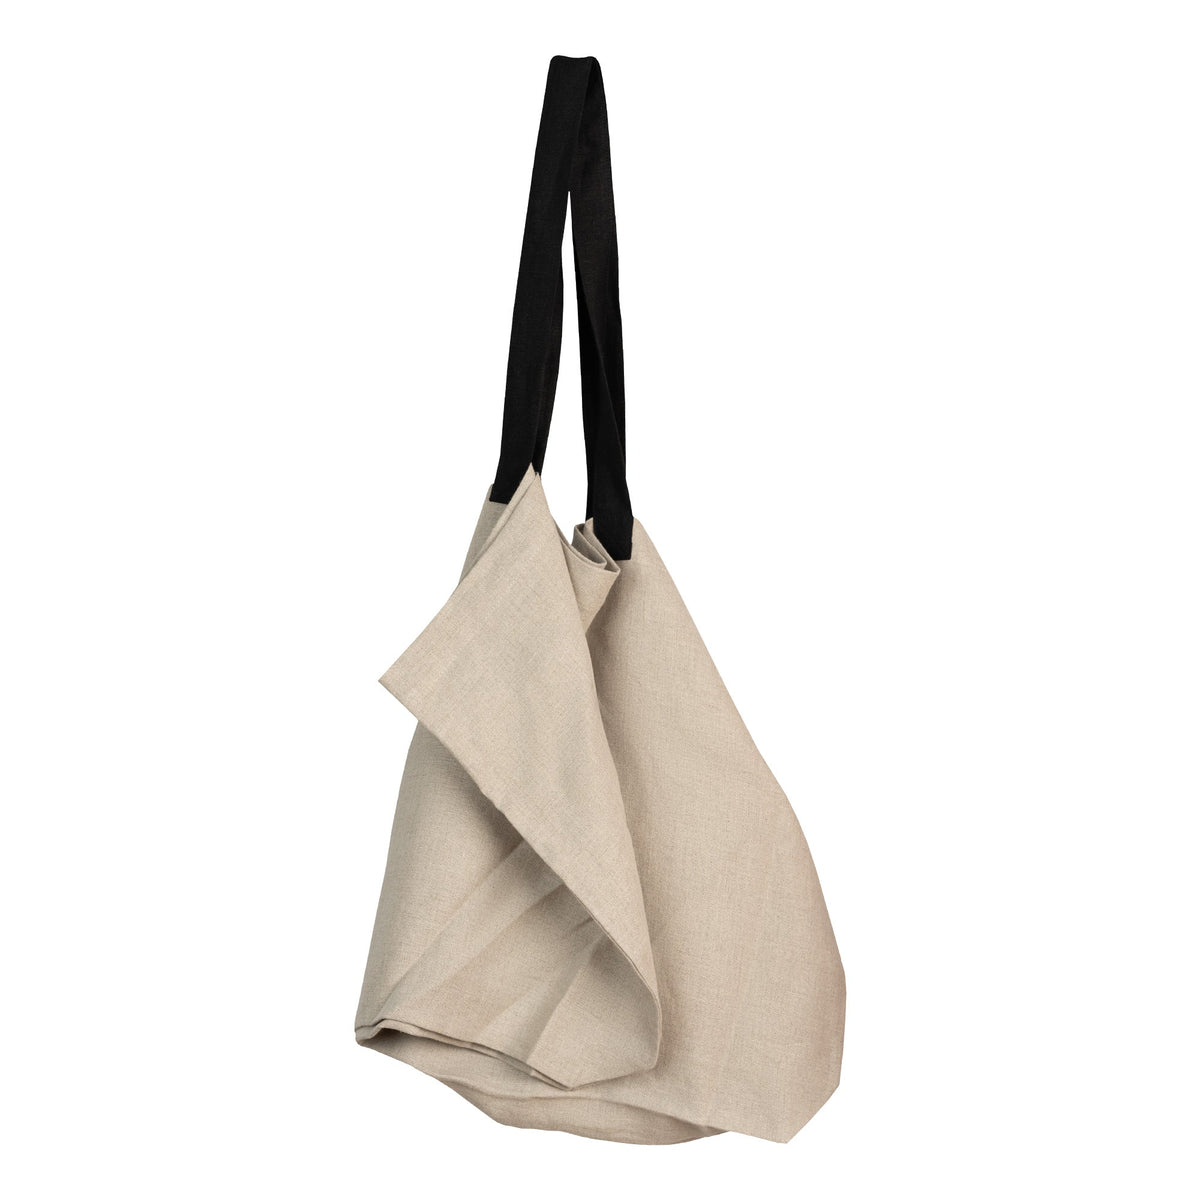 MENIQUE 100% Linen Tote Bag with Black Handles